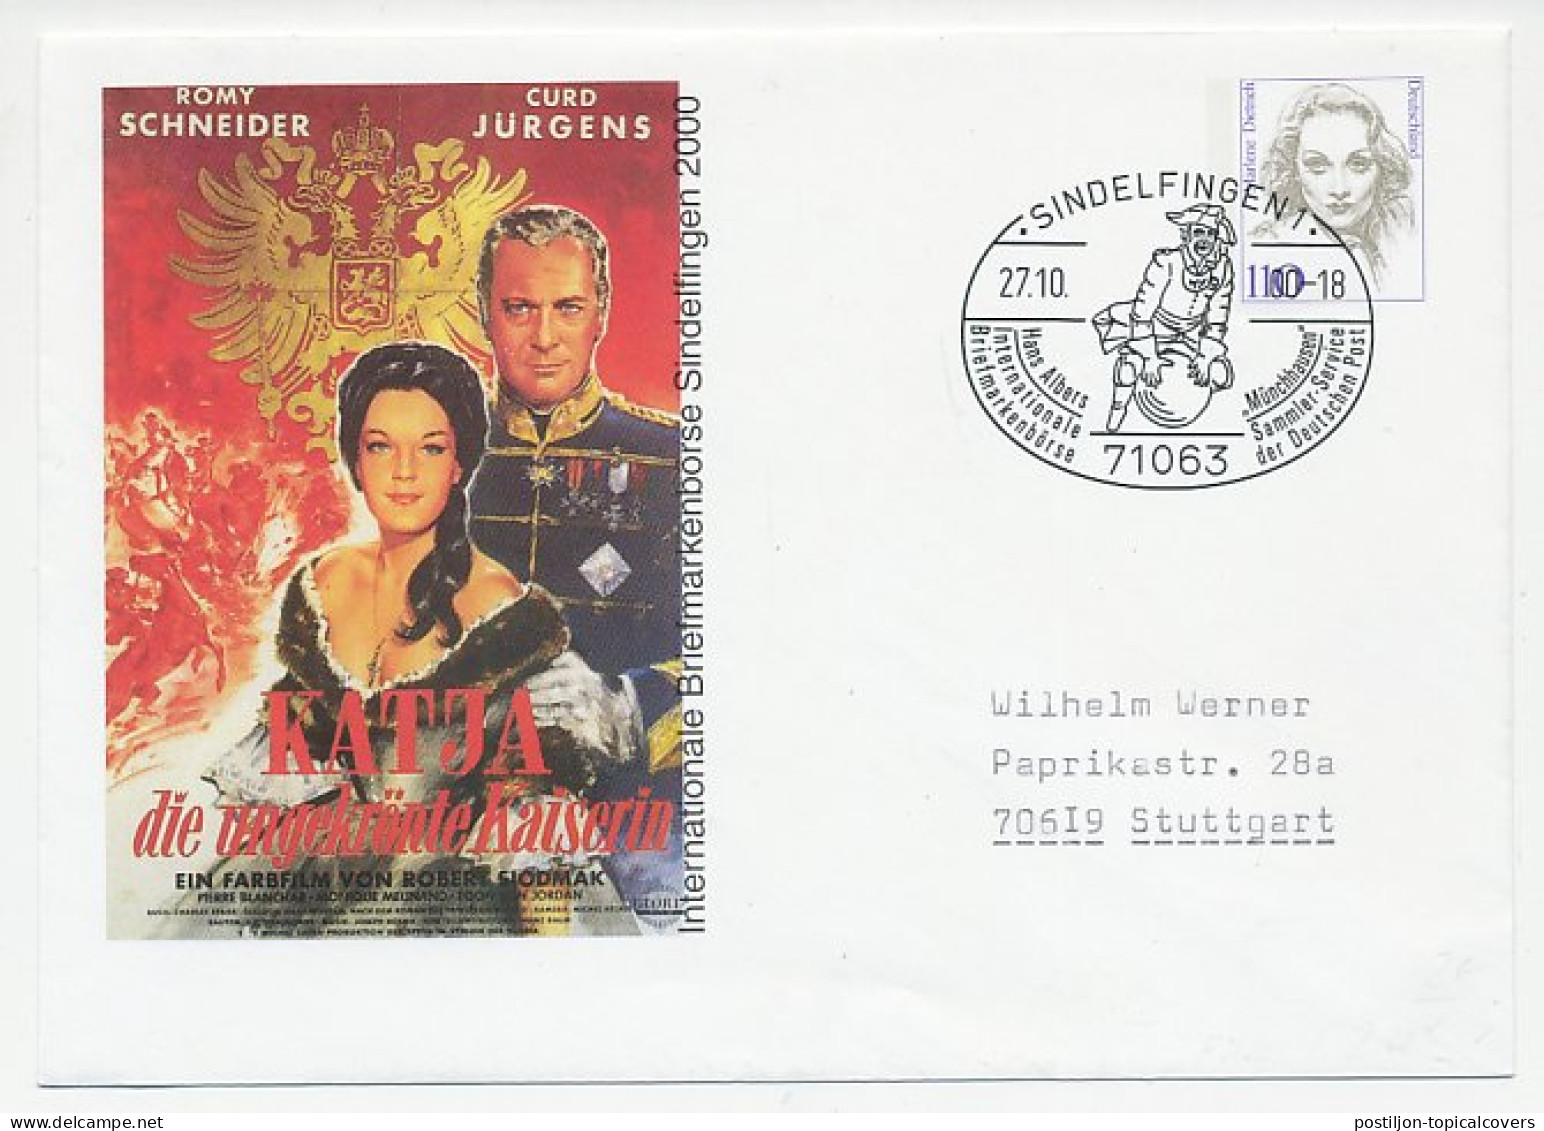 Postal Stationery / Postmark Germany 2000 Katja - The Uncrowned Empress  - Film